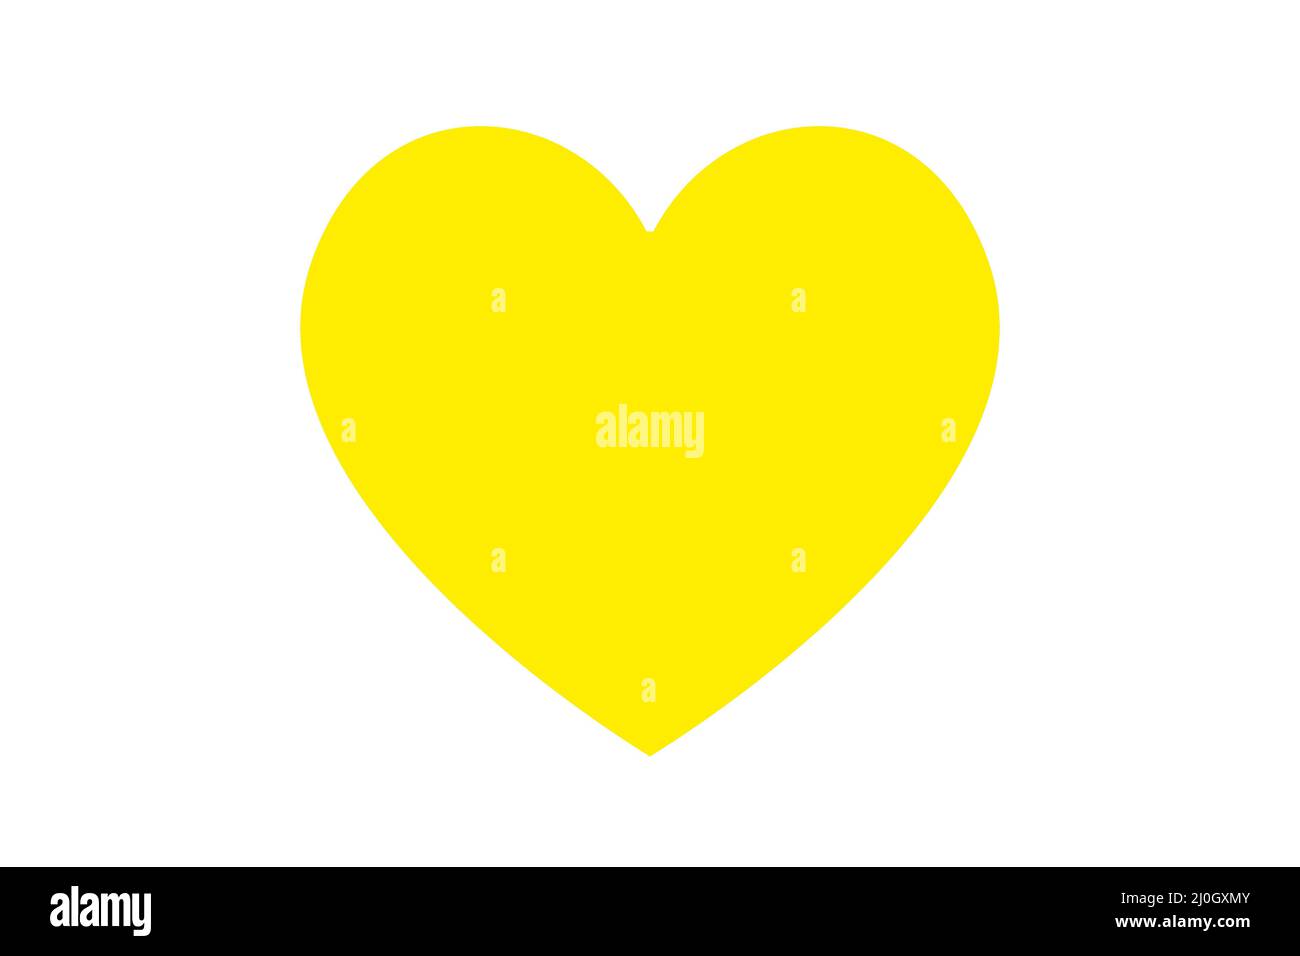 Yellow heart icon flat design Stock Photo